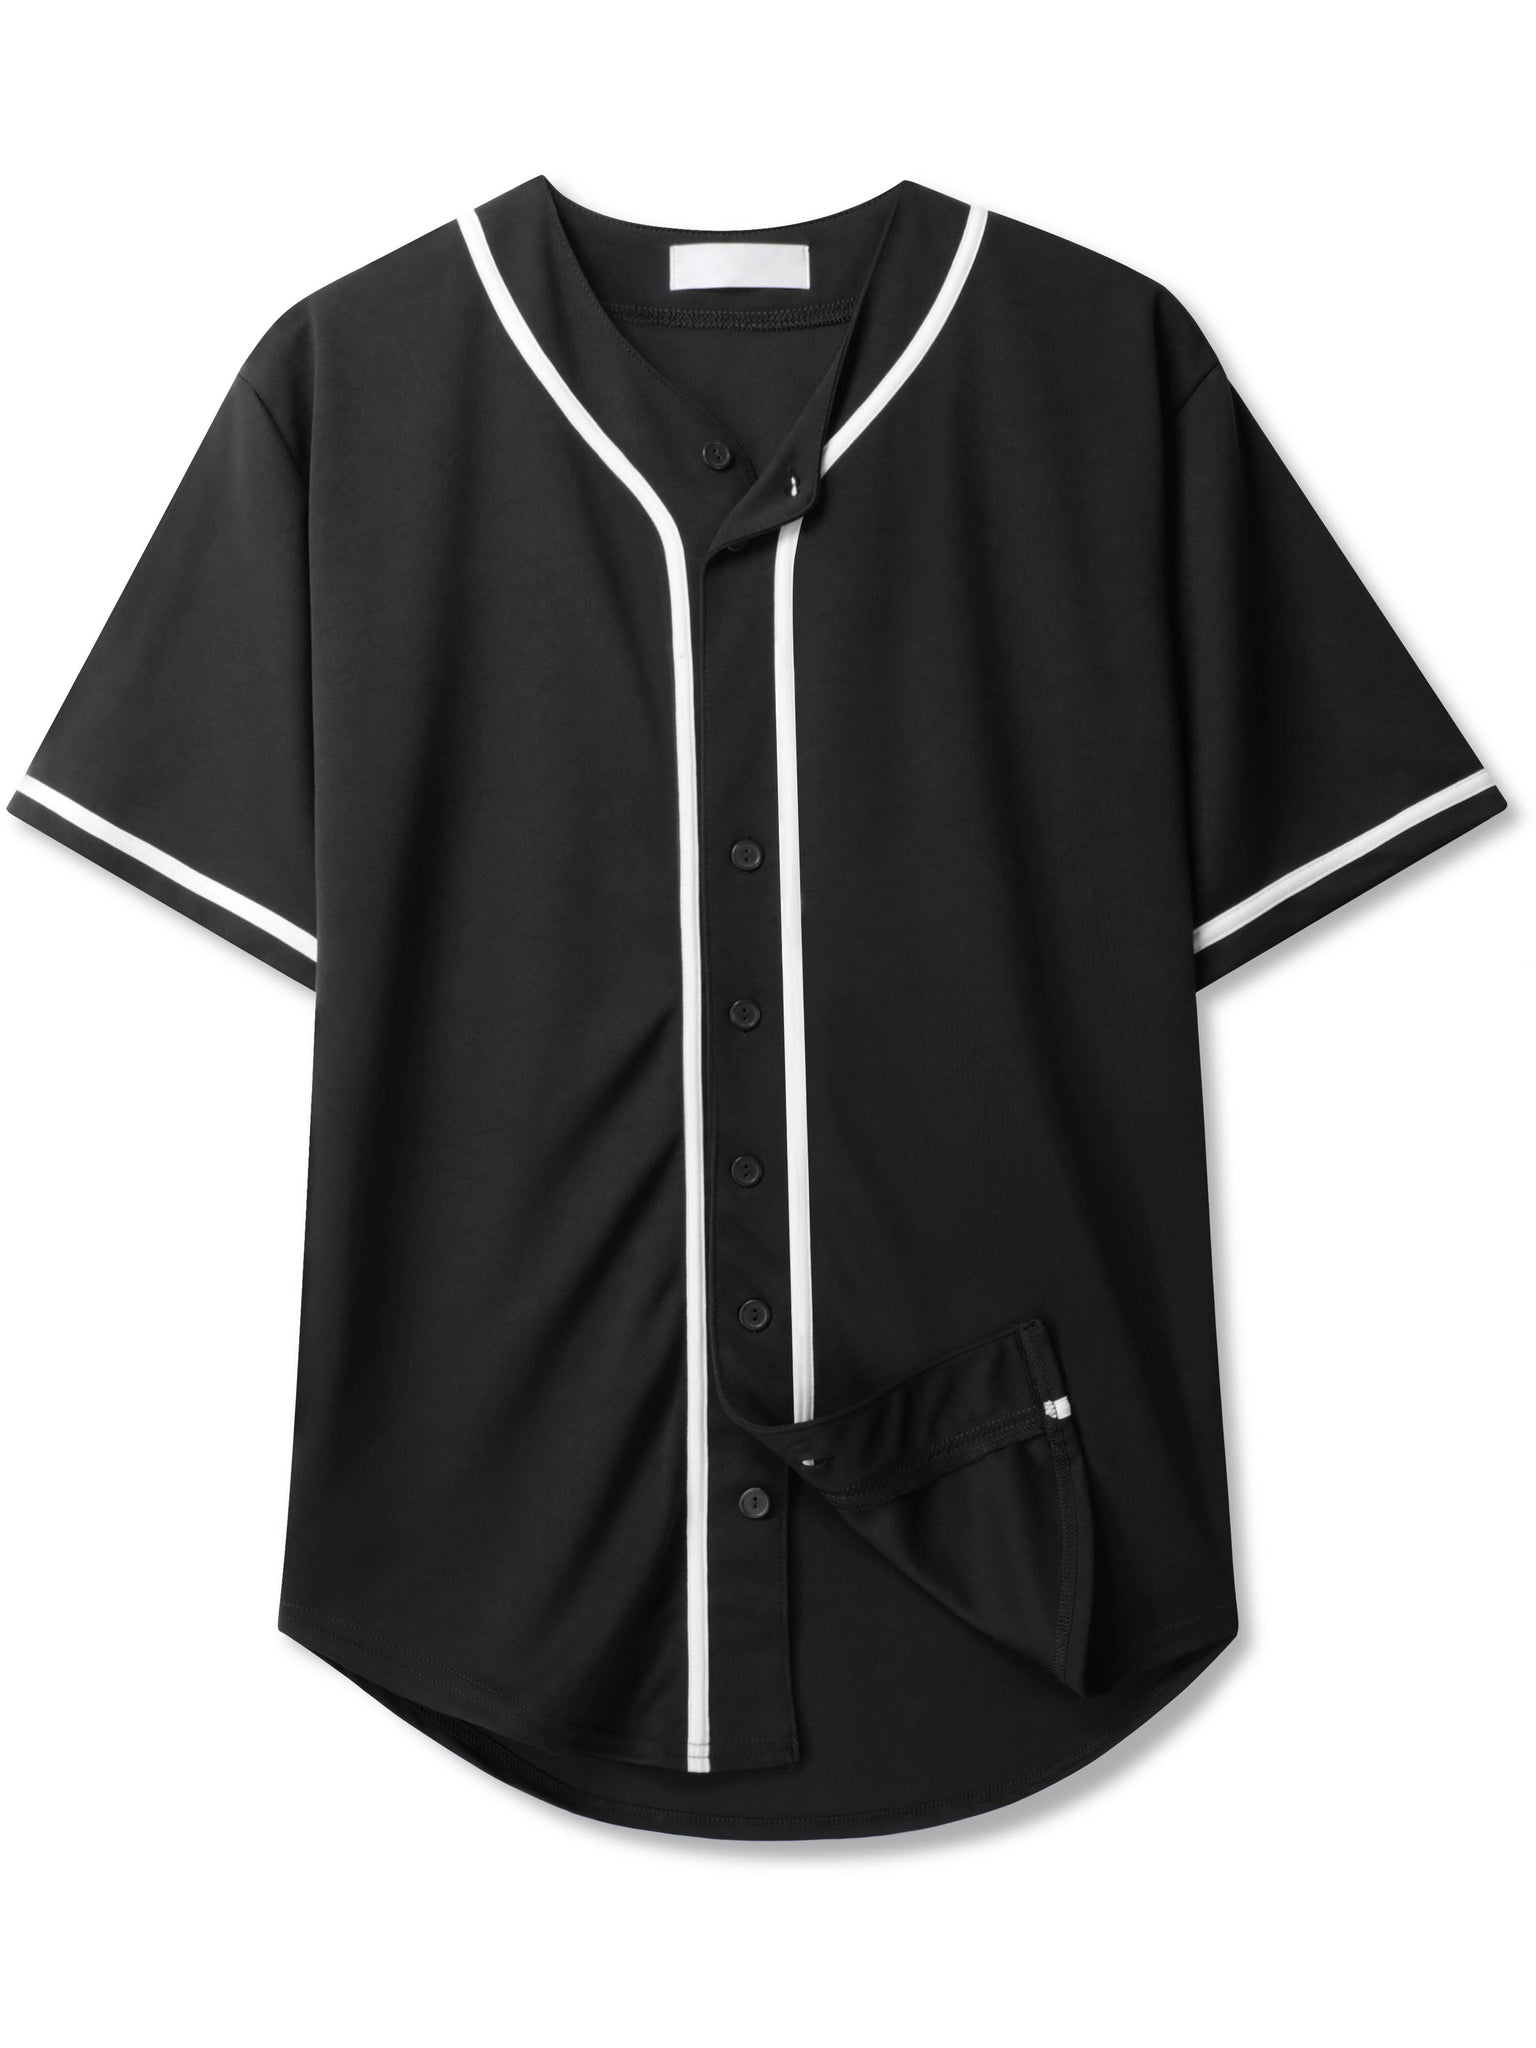 Mens Team Sports Printable Blank Baseball Jersey Collar Button Up Shirts - Men > T-shirts & Tank Tops > Baseball Jersey | Hat and Beyond 3X-Large /